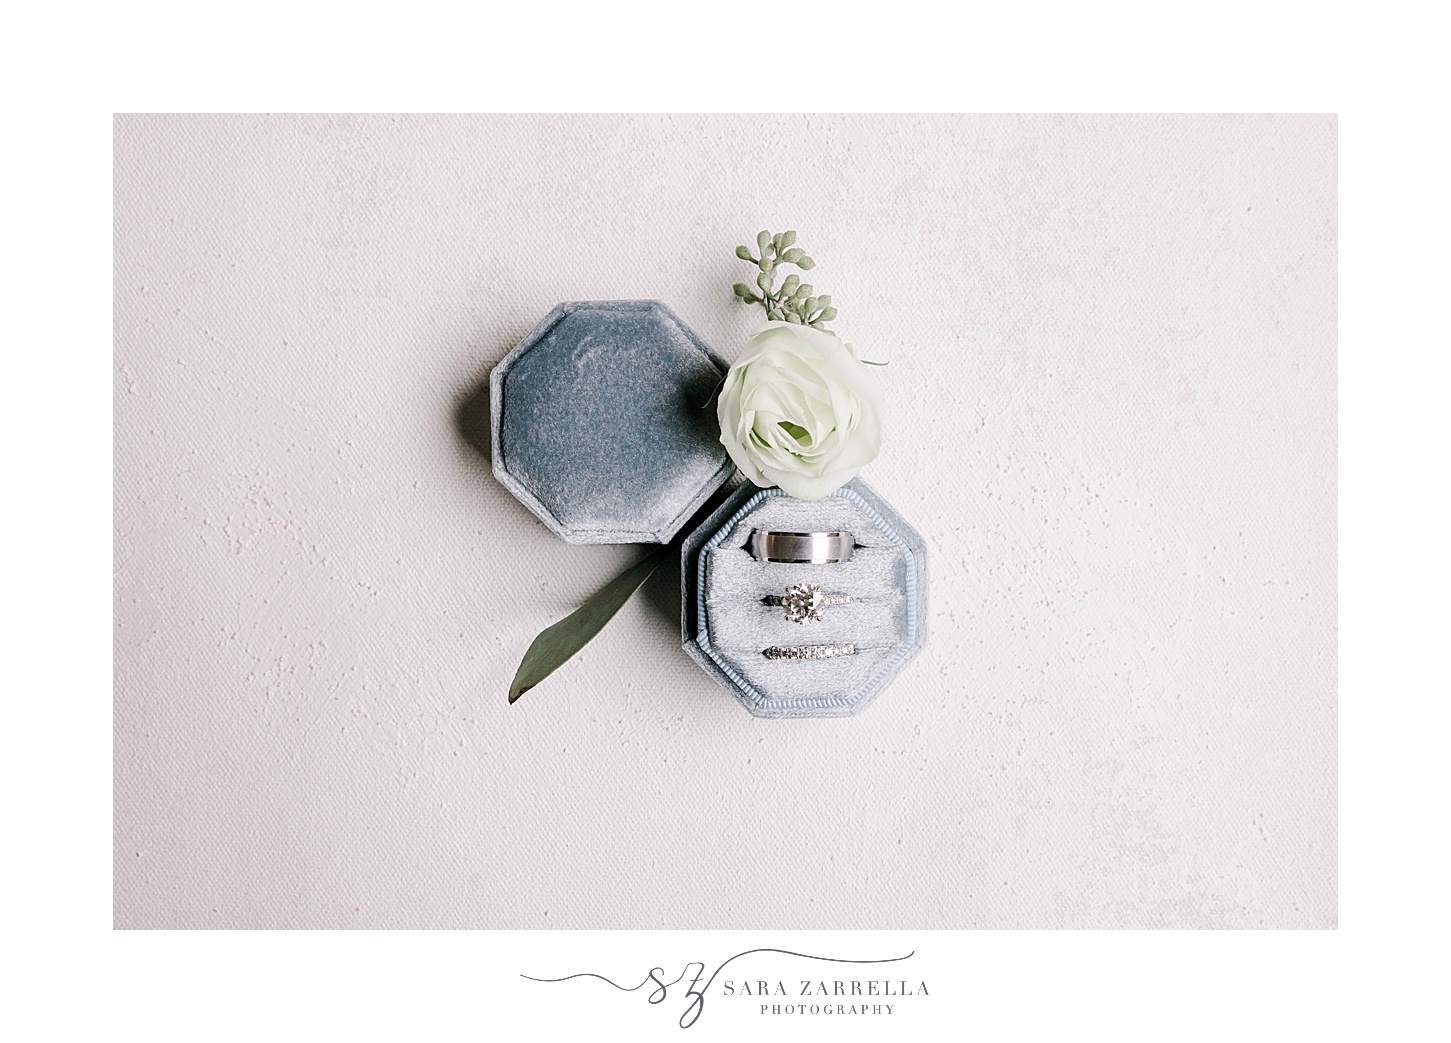 wedding rings in blue boxes for Newport Harbor Island Resort wedding